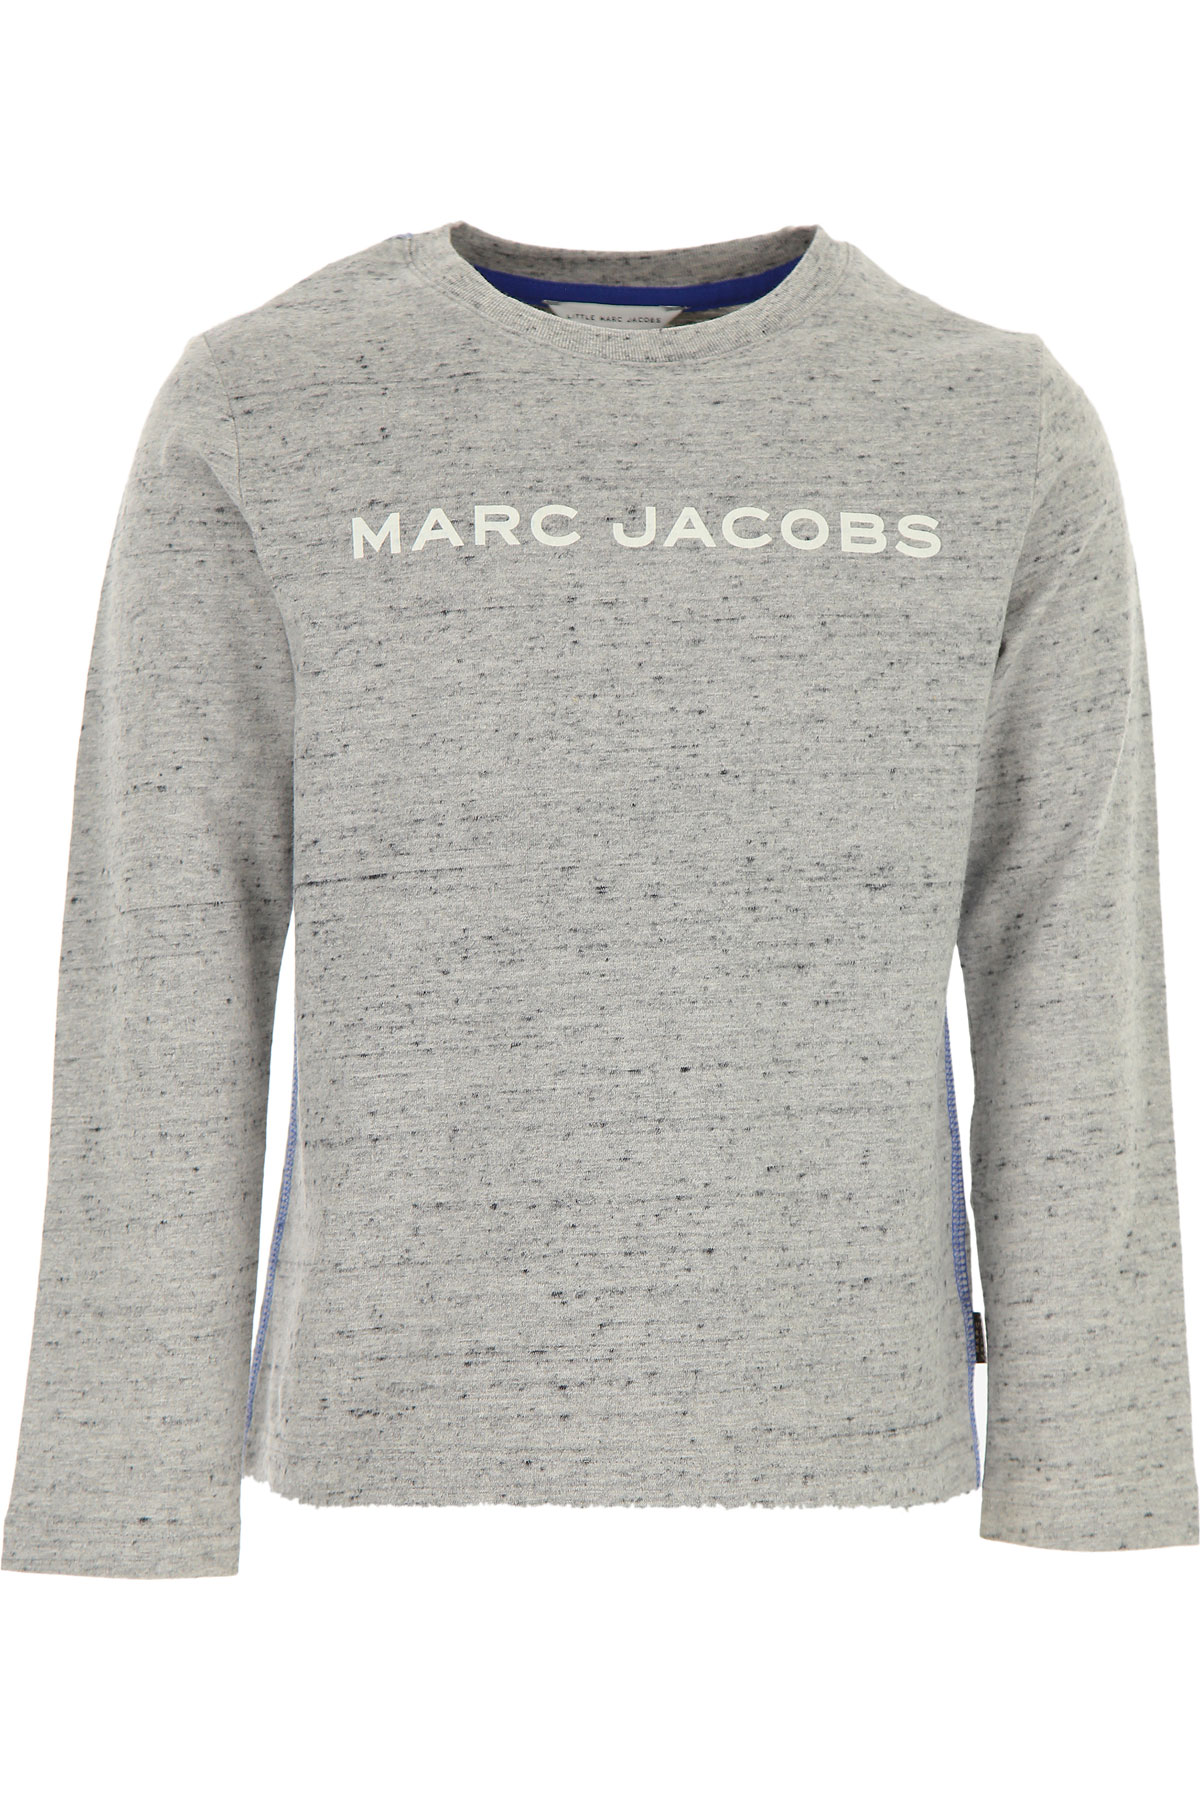 Marc Jacobs Kinder T-Shirt für Jungen Günstig im Sale, Grau, Baumwolle, 2017, 14Y 2Y 3Y 4Y